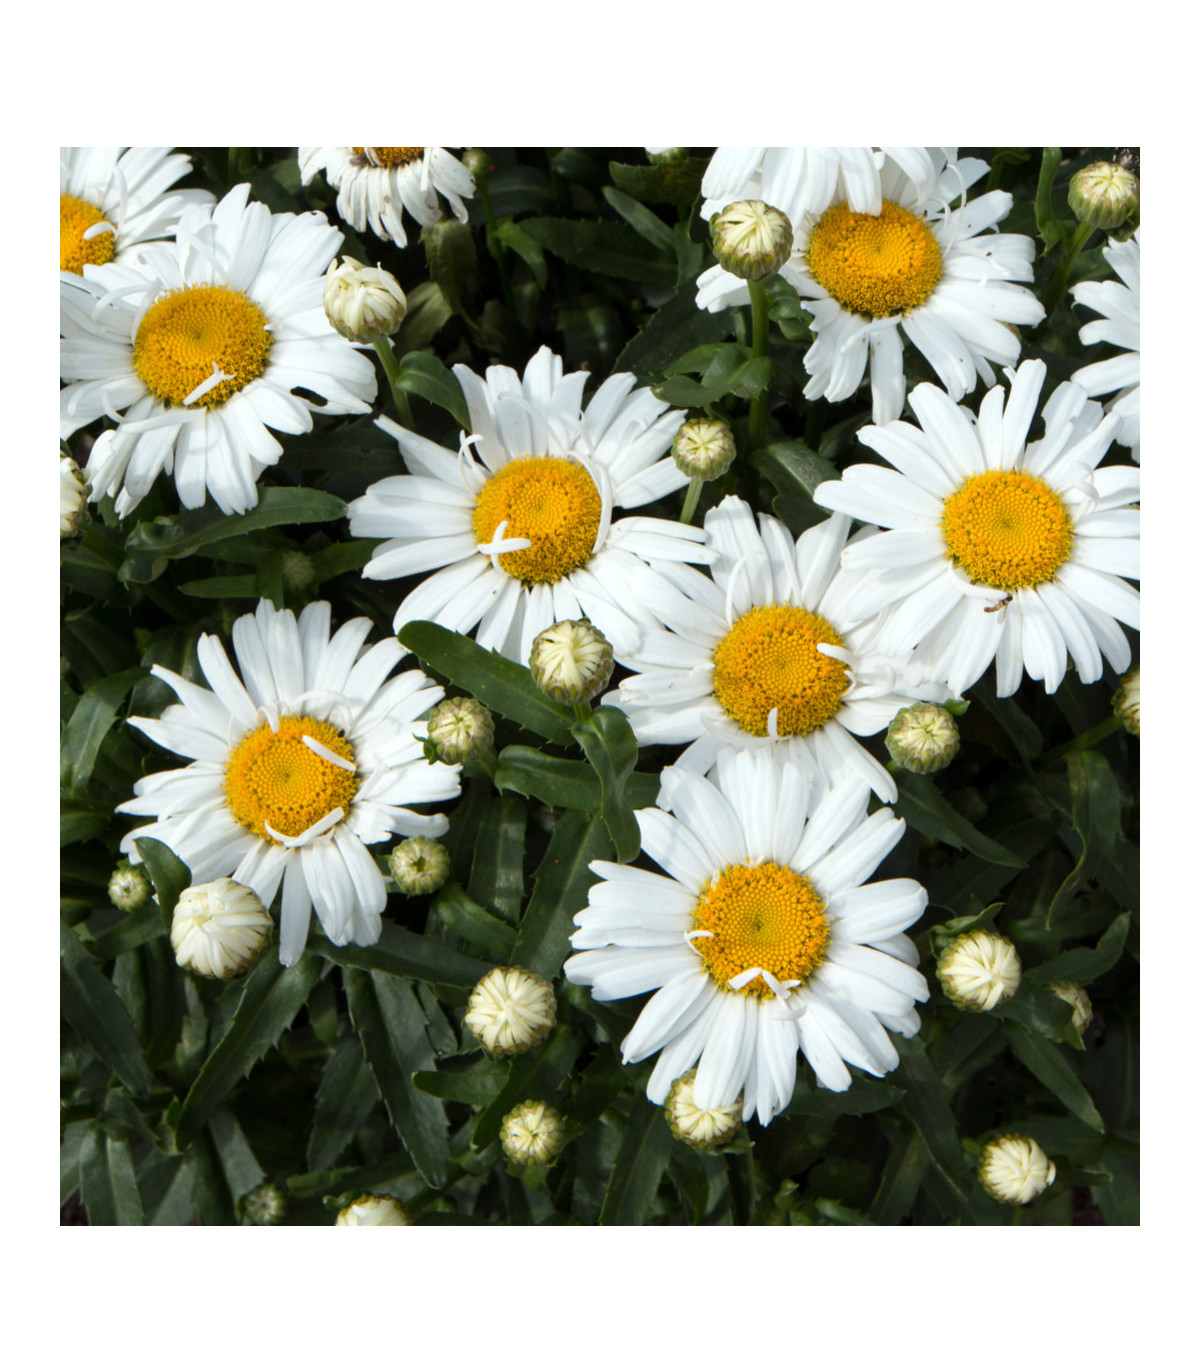 Margaréta biela Hviezda z Antverp - Chrysanthemum leucanthemum max. - semená - 0,4 g